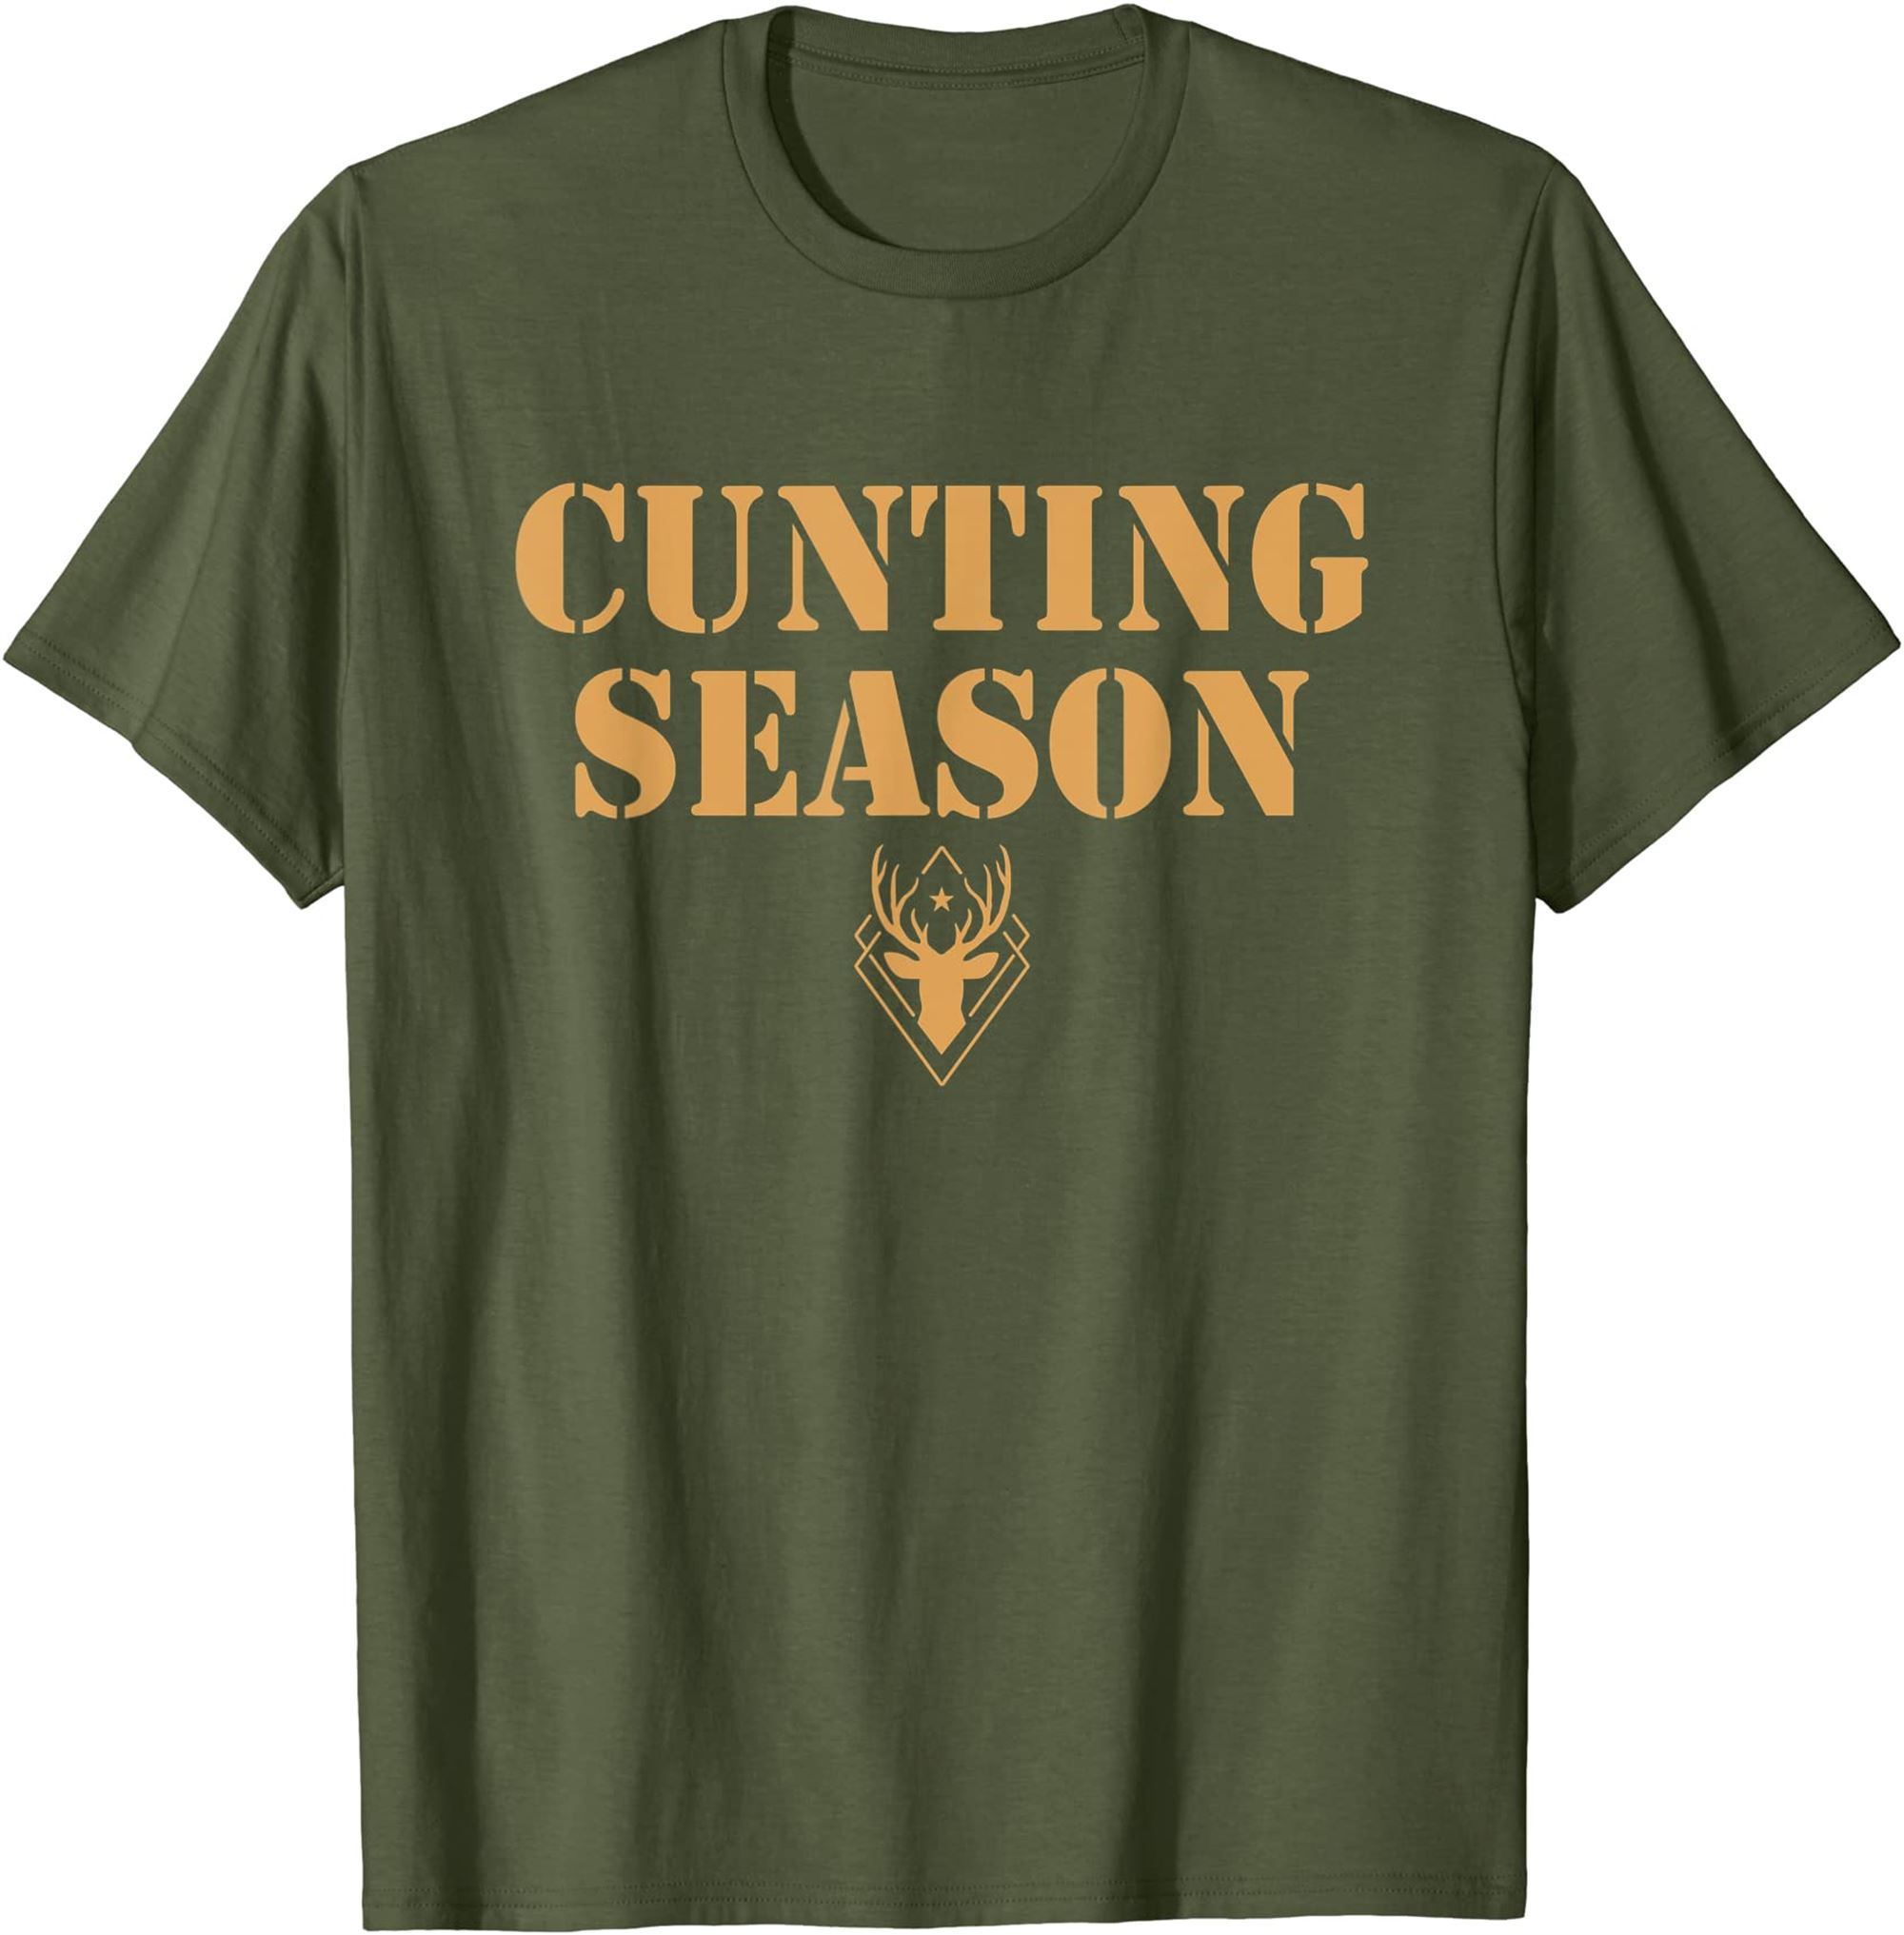 Cunting Season Shirt Hunting Counting Season T-shirt Full Size Up To 5xl